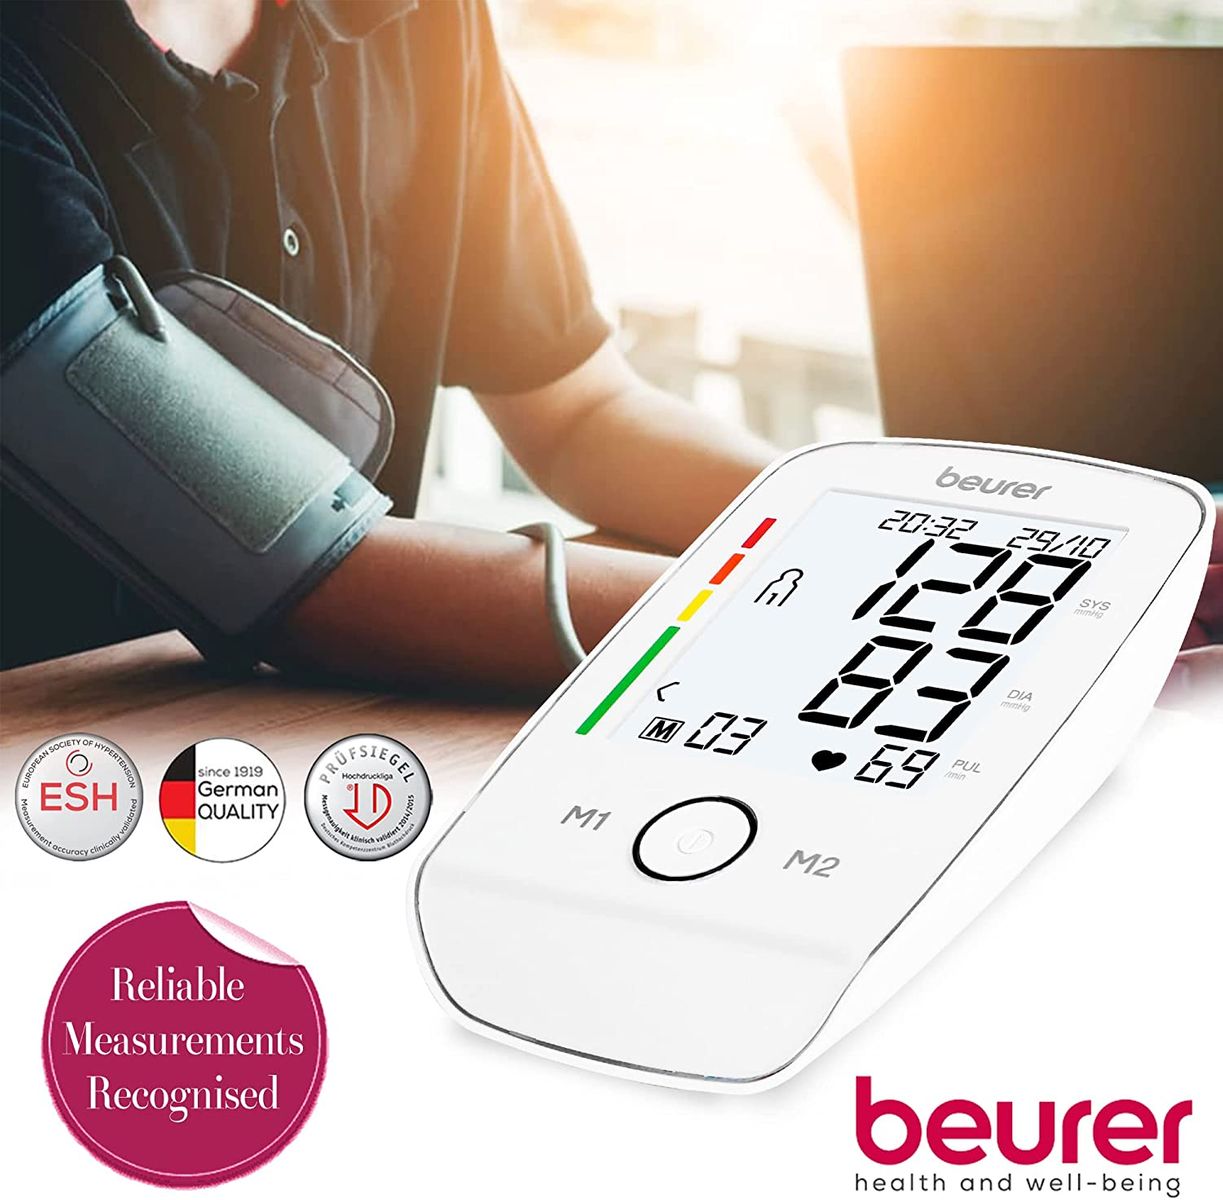 Beurer BM 45 Upper arm blood pressure monitor, white